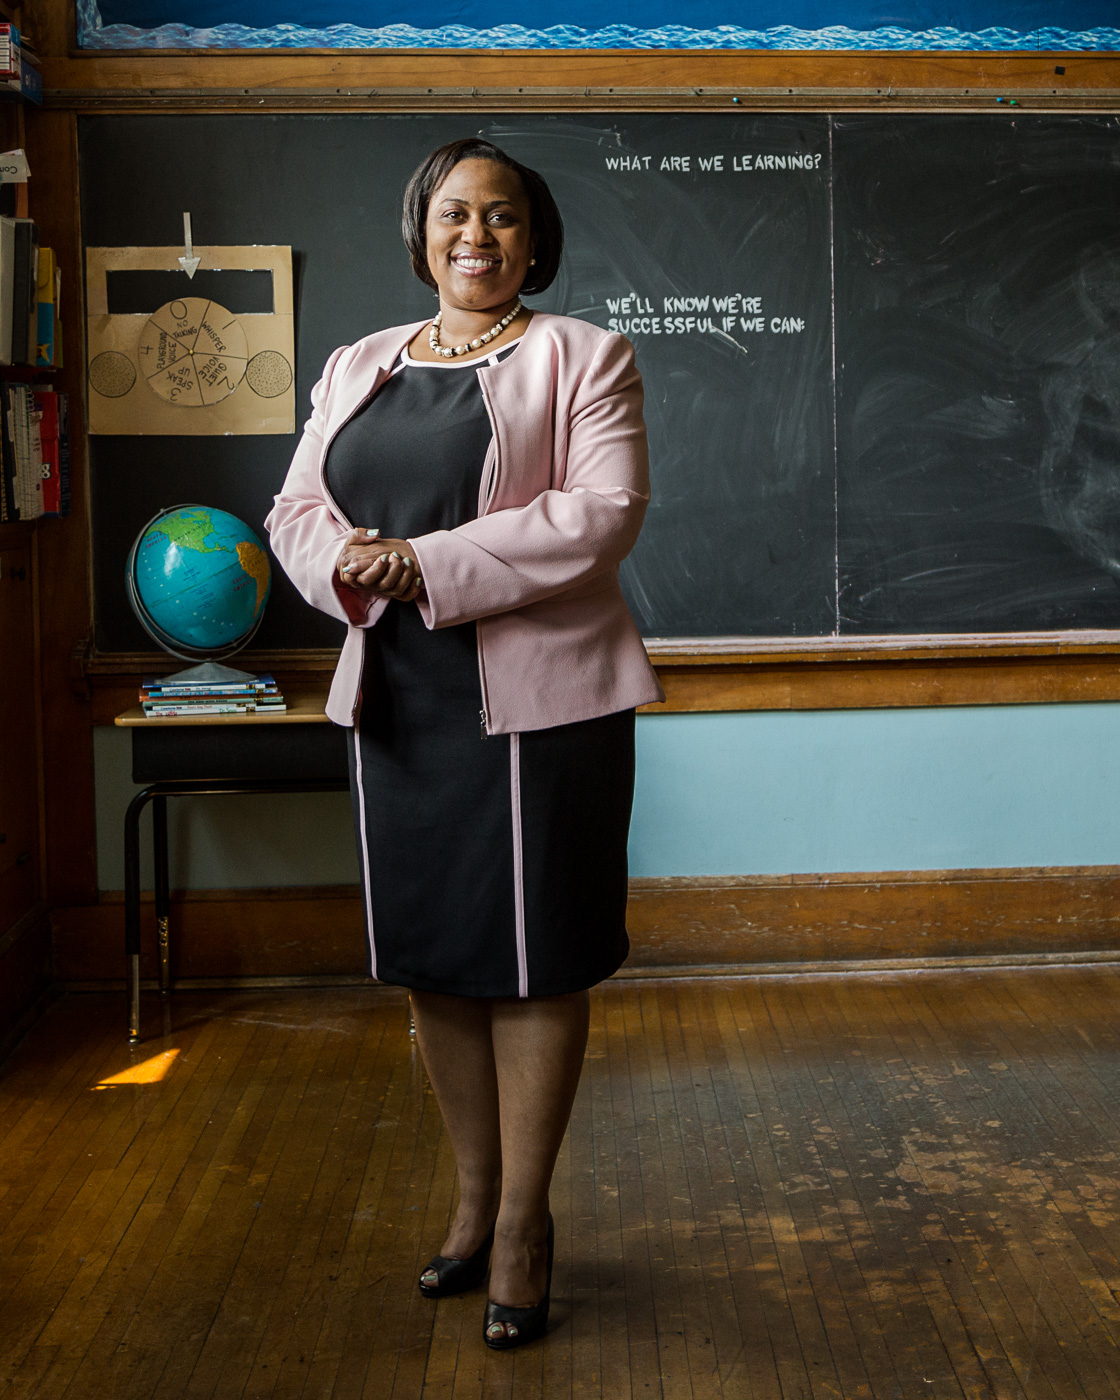 editorial portrait - portrait of Dr Darienne Driver in a grade school classroom with a chalkboard